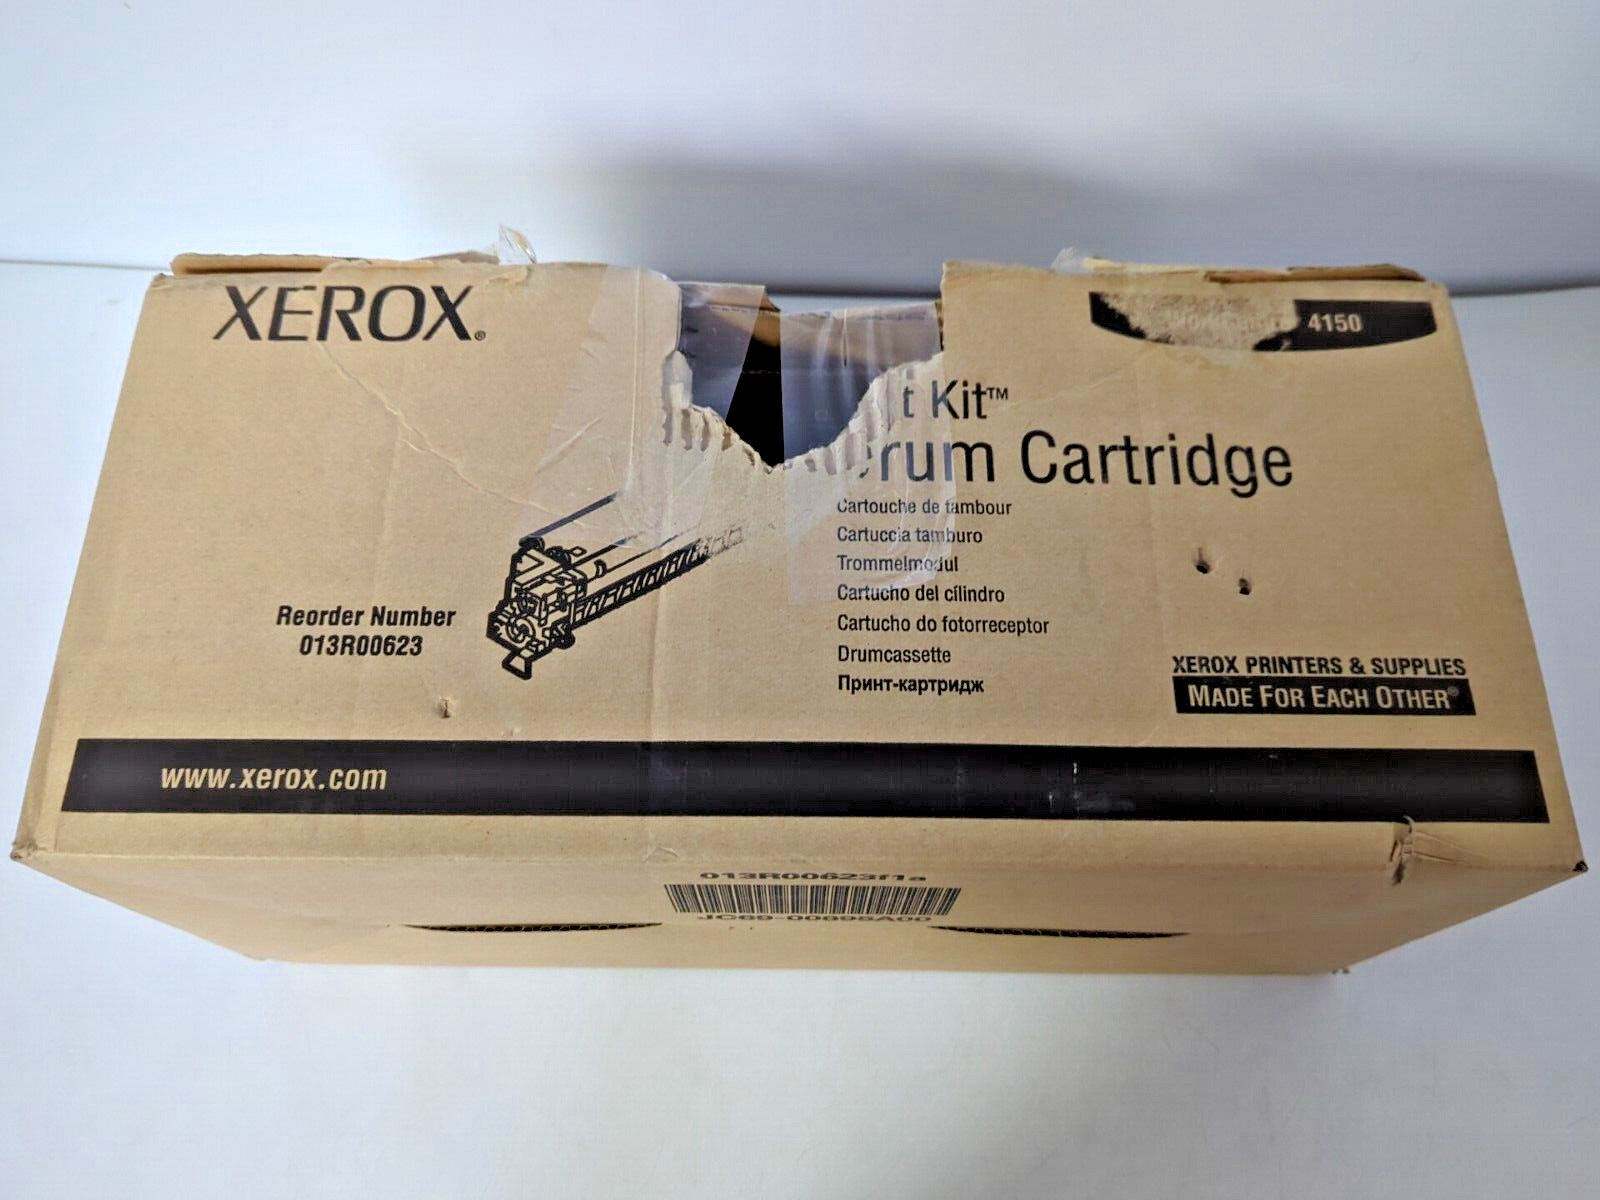 Xerox WorkCentre 4150 SMart Kit Drum Cartridge 013R00623